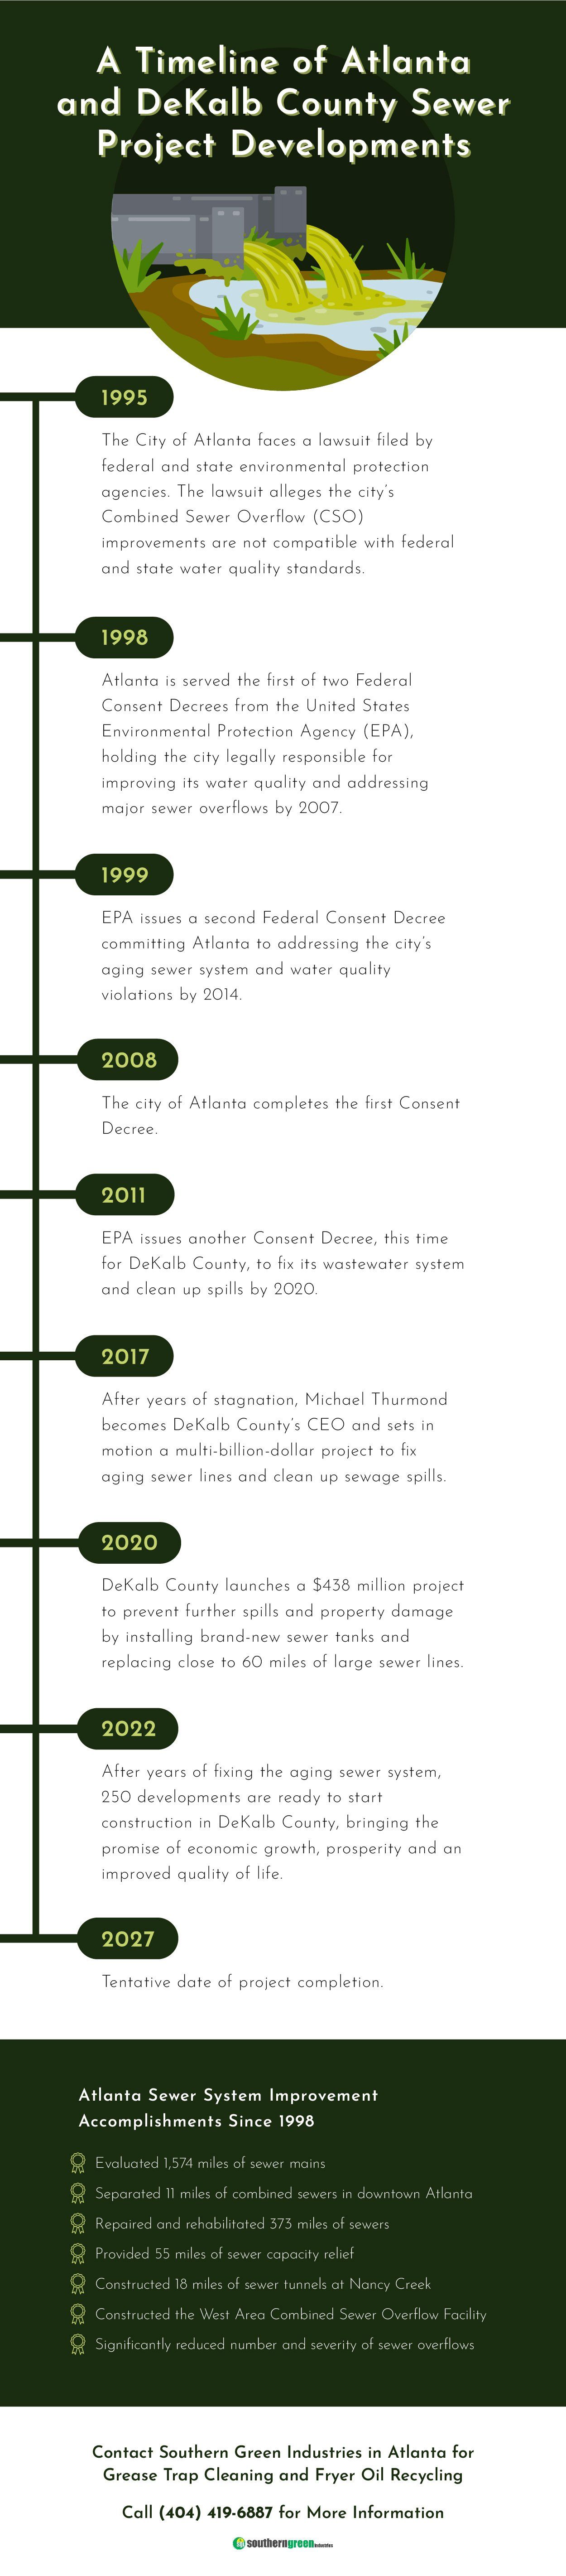 timeline of Atlanta sewage projects